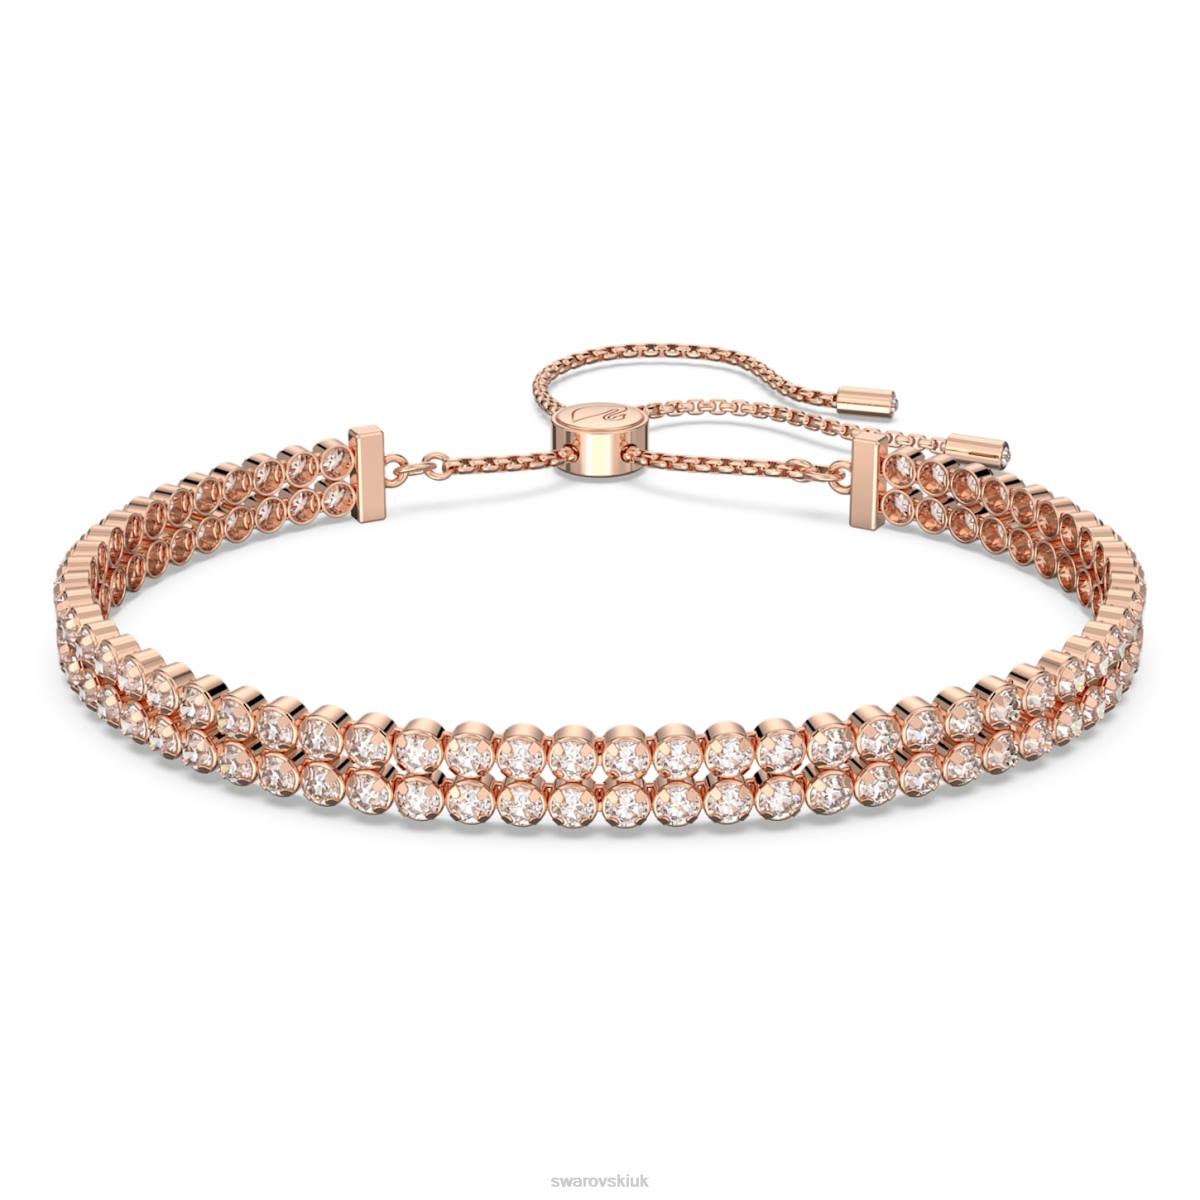 Jewelry Swarovski Subtle bracelet Round cut, White, Rose gold-tone plated 48JX475